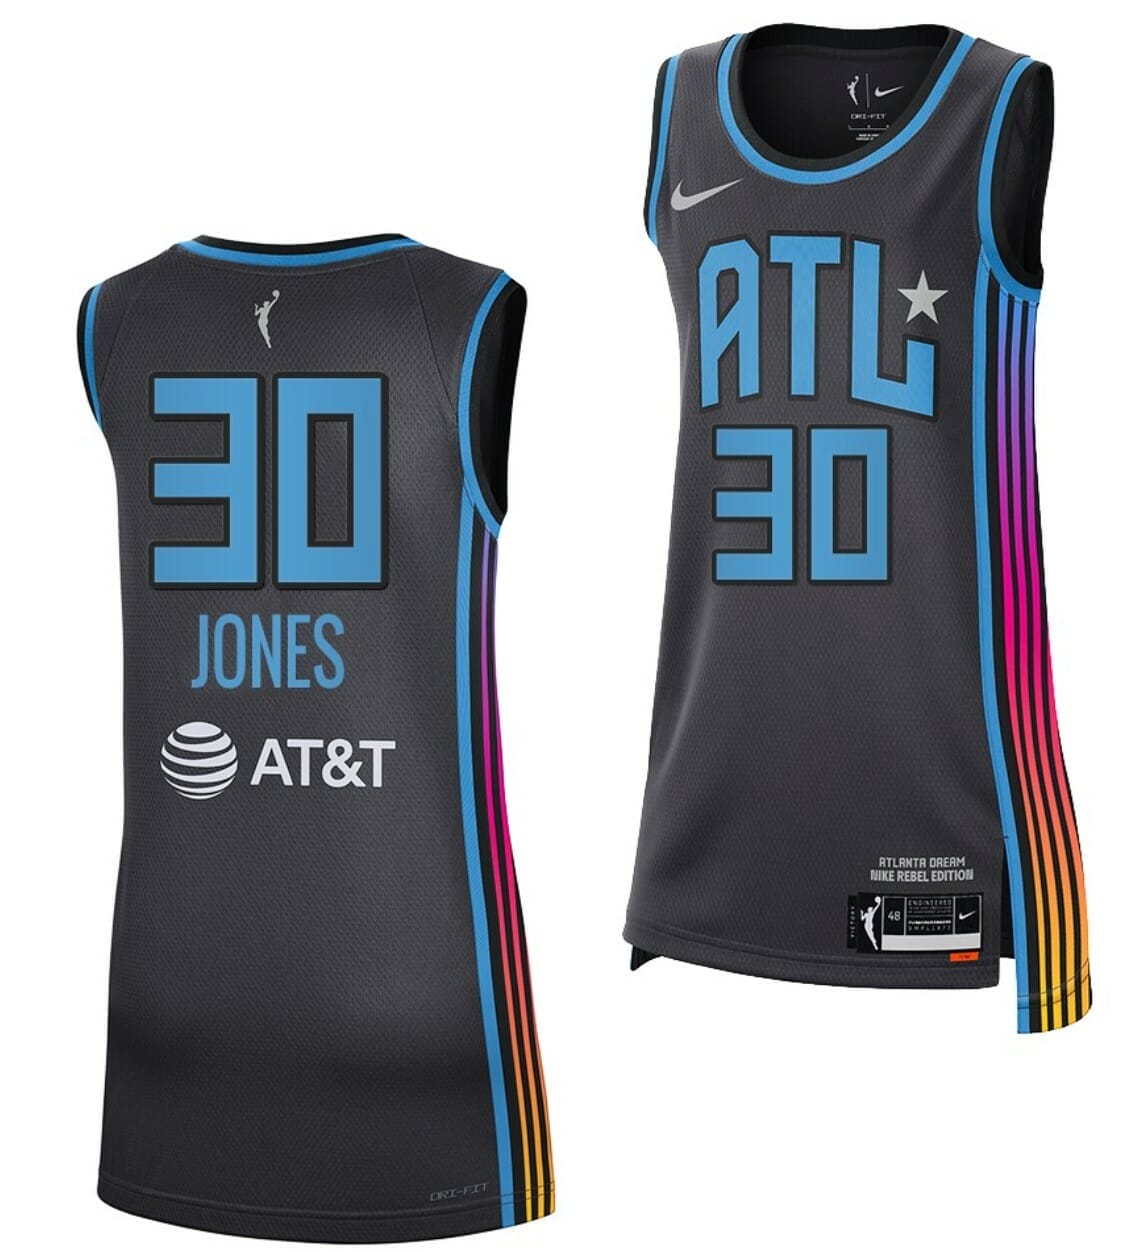 [Trending] Get New Atlanta Dream Basketball Jersey